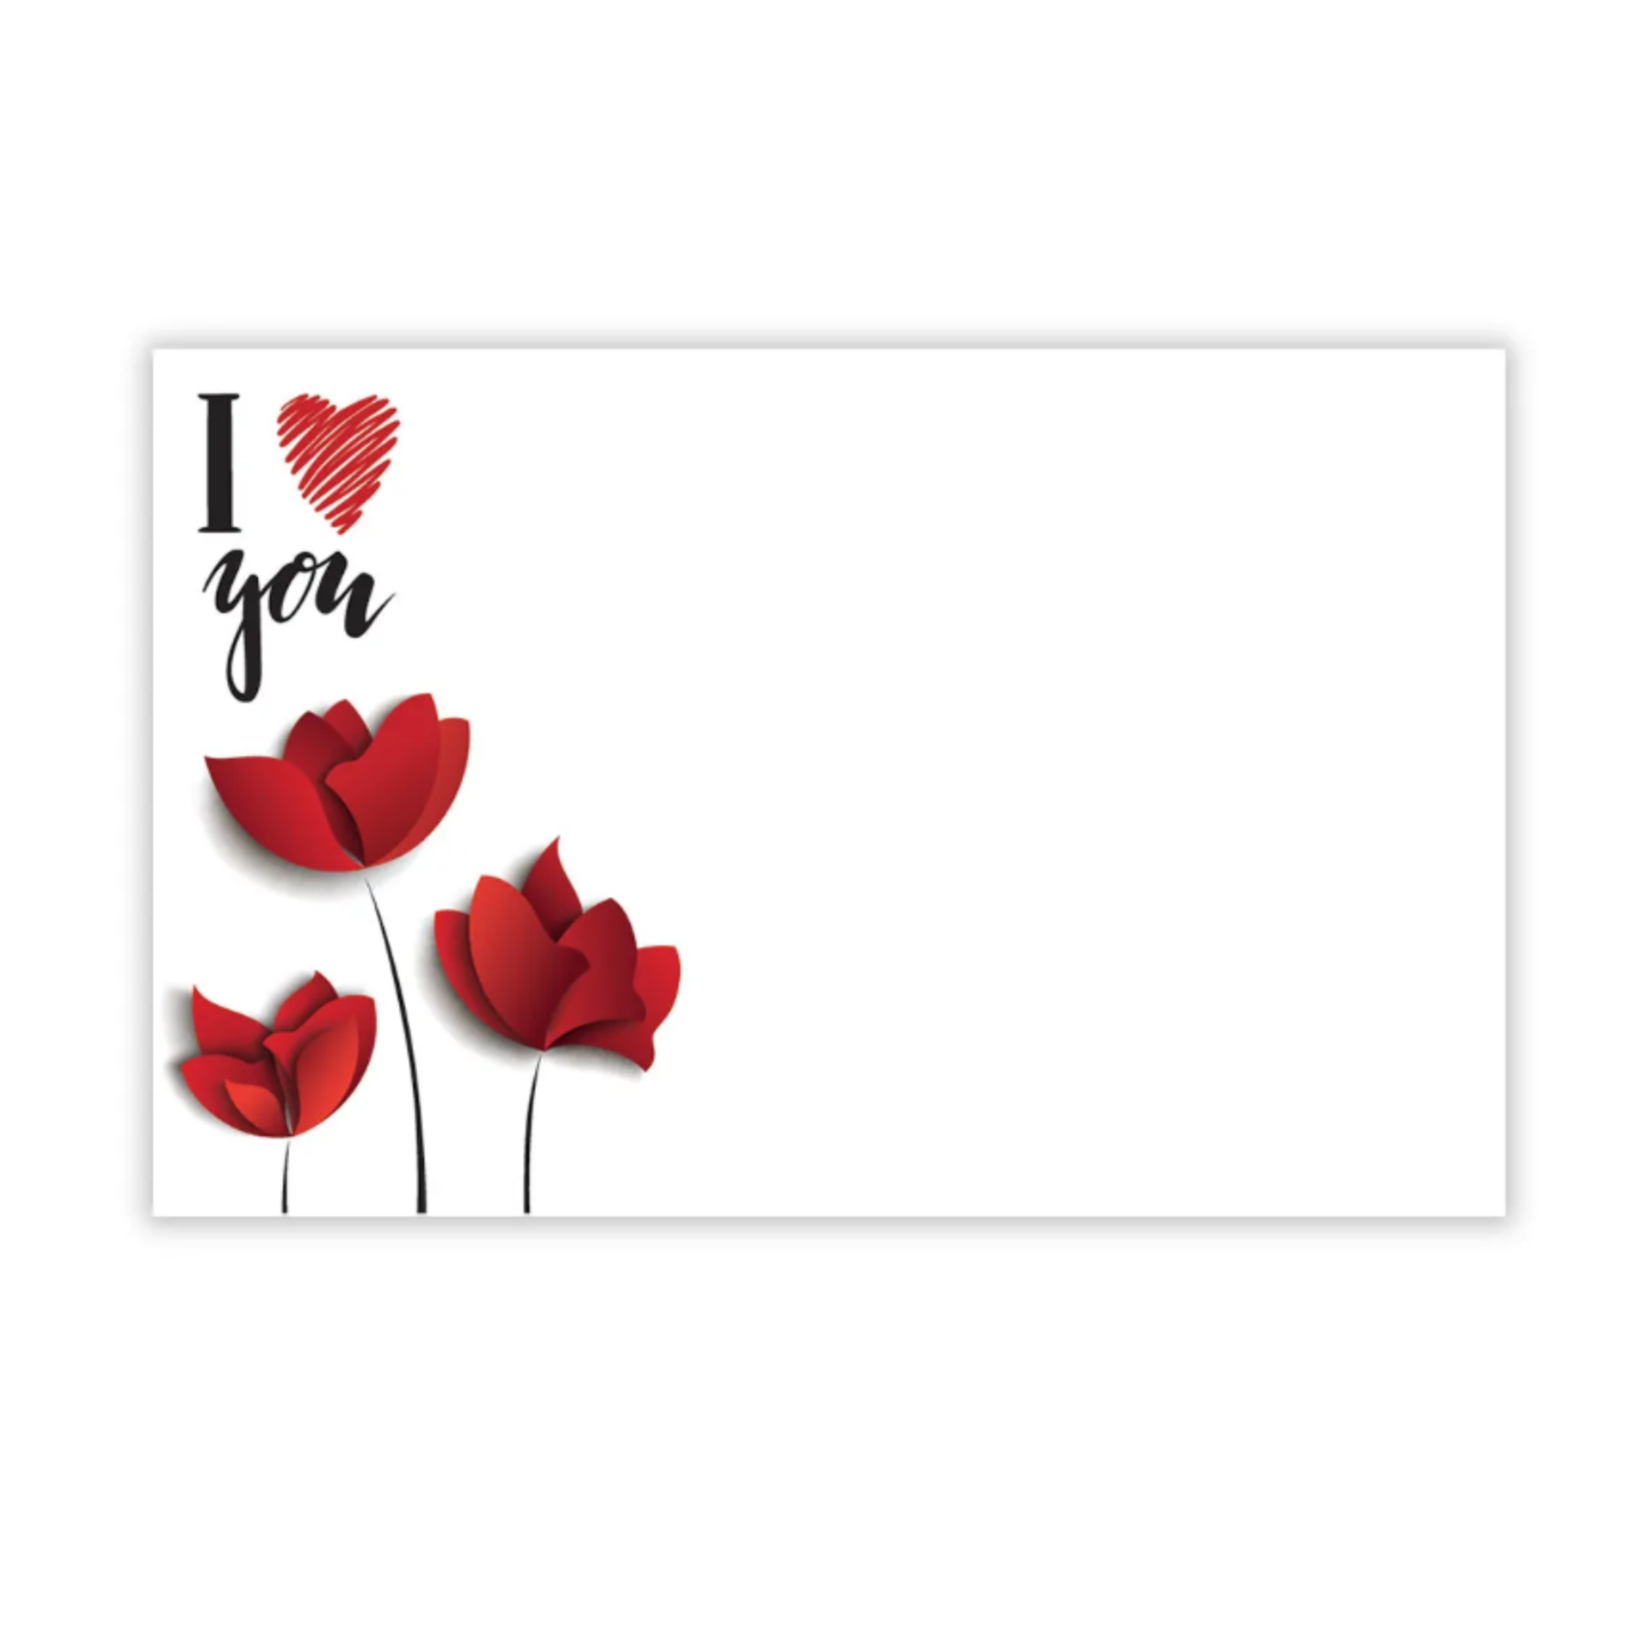 "I LOVE YOU" CAPRI CARD